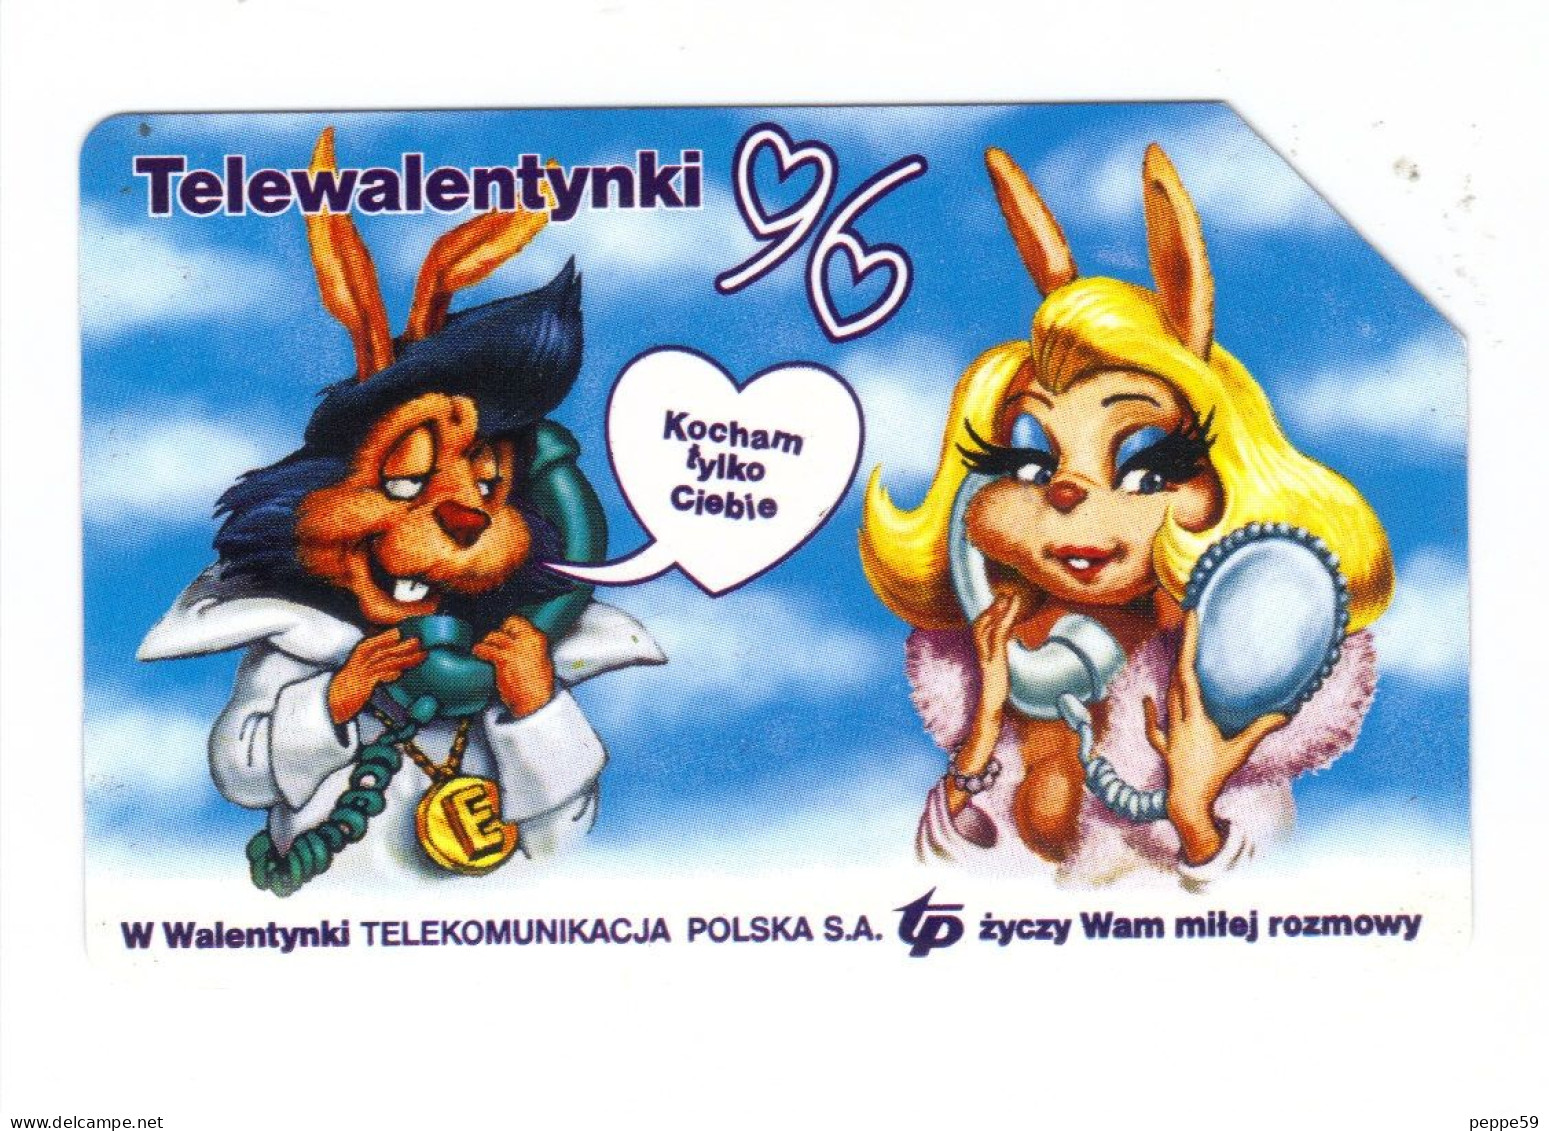 Carta Telefonica Polonia - Telewalentynki 96 - Polen